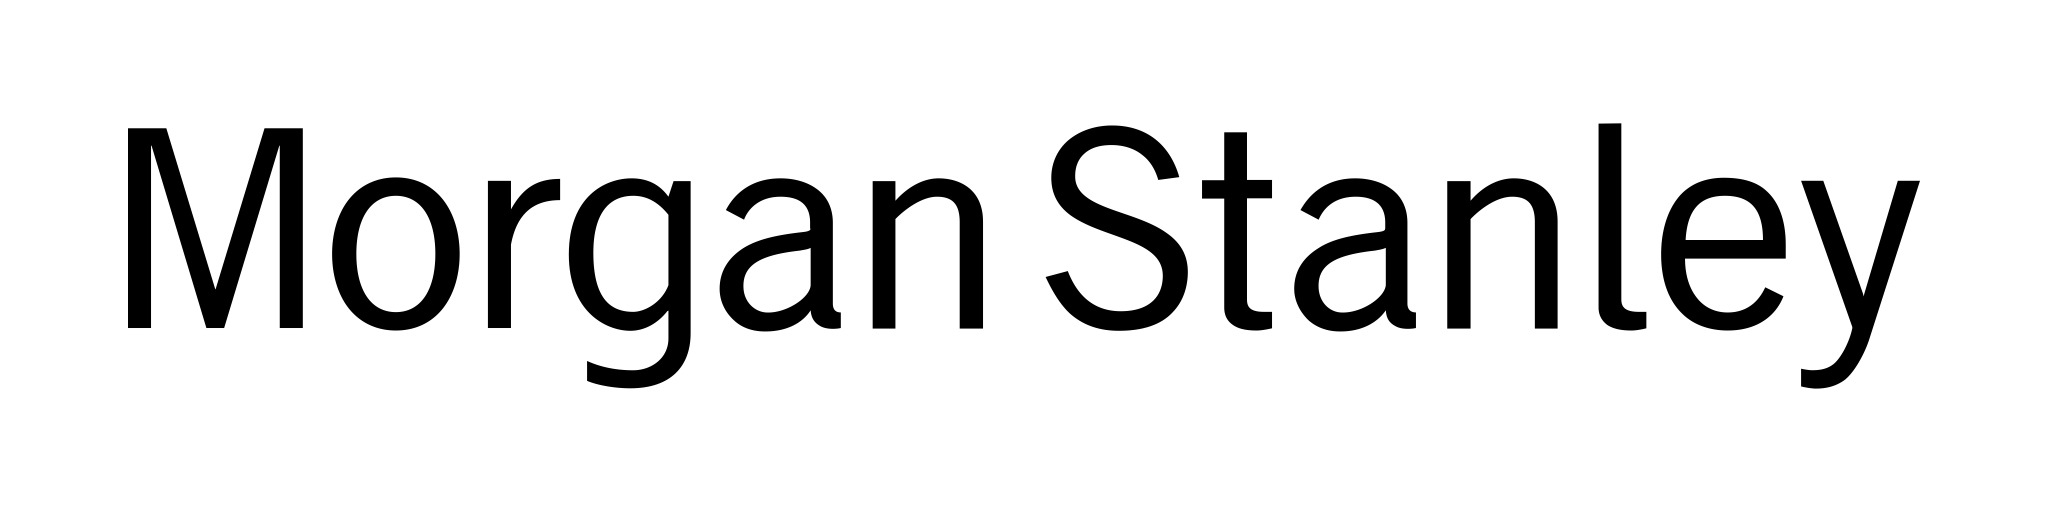 Morgan Stanley Logo png